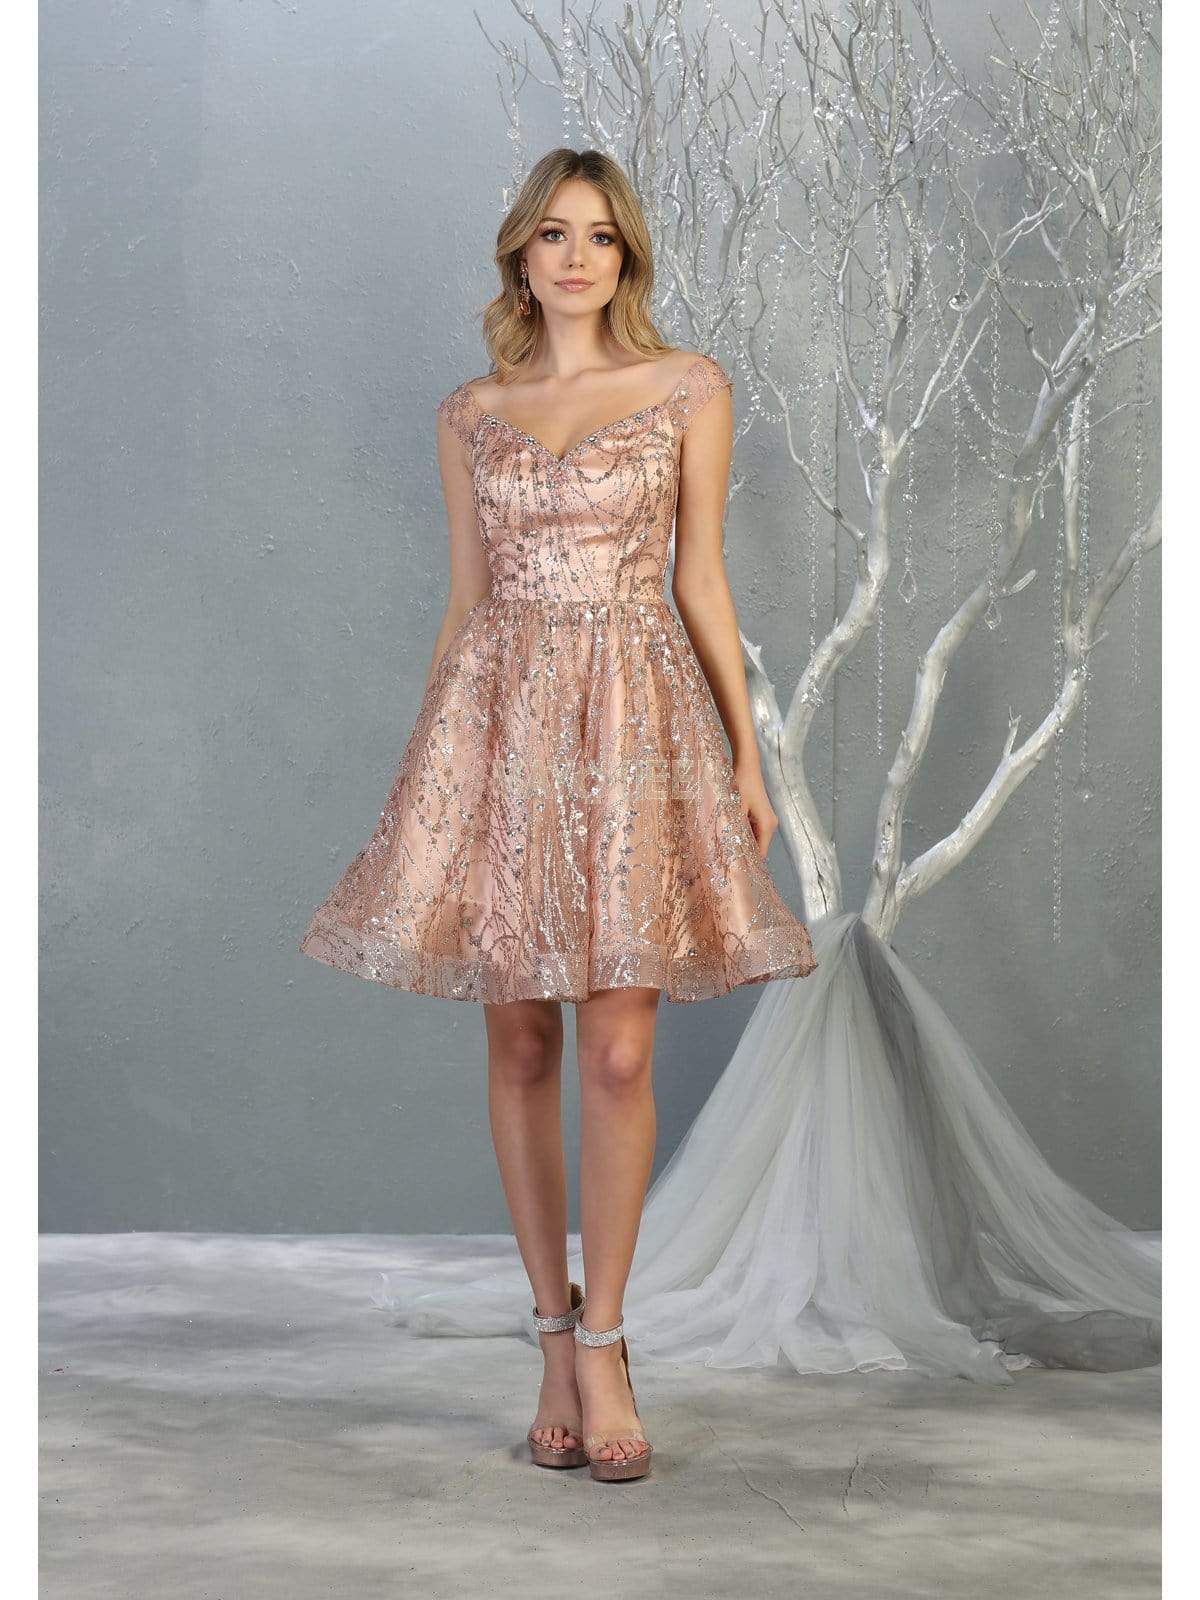 May Queen - MQ1757 Glitter Embellished Off-Shoulder Cocktail Dress Homecoming Dresses 4 / Rosegold